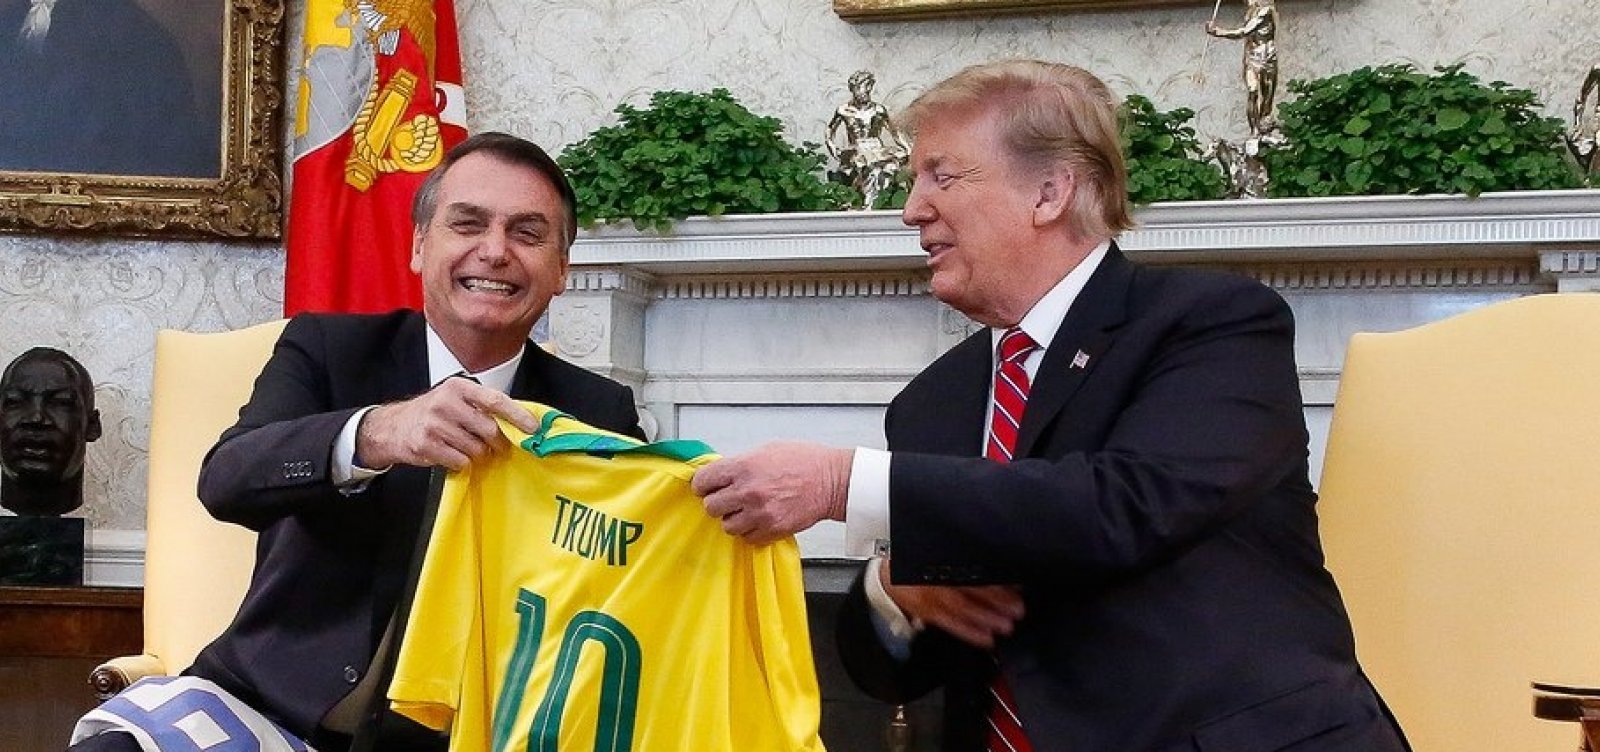 Ao lado de Trump, Bolsonaro diz que vai lutar contra 'politicamente correto'